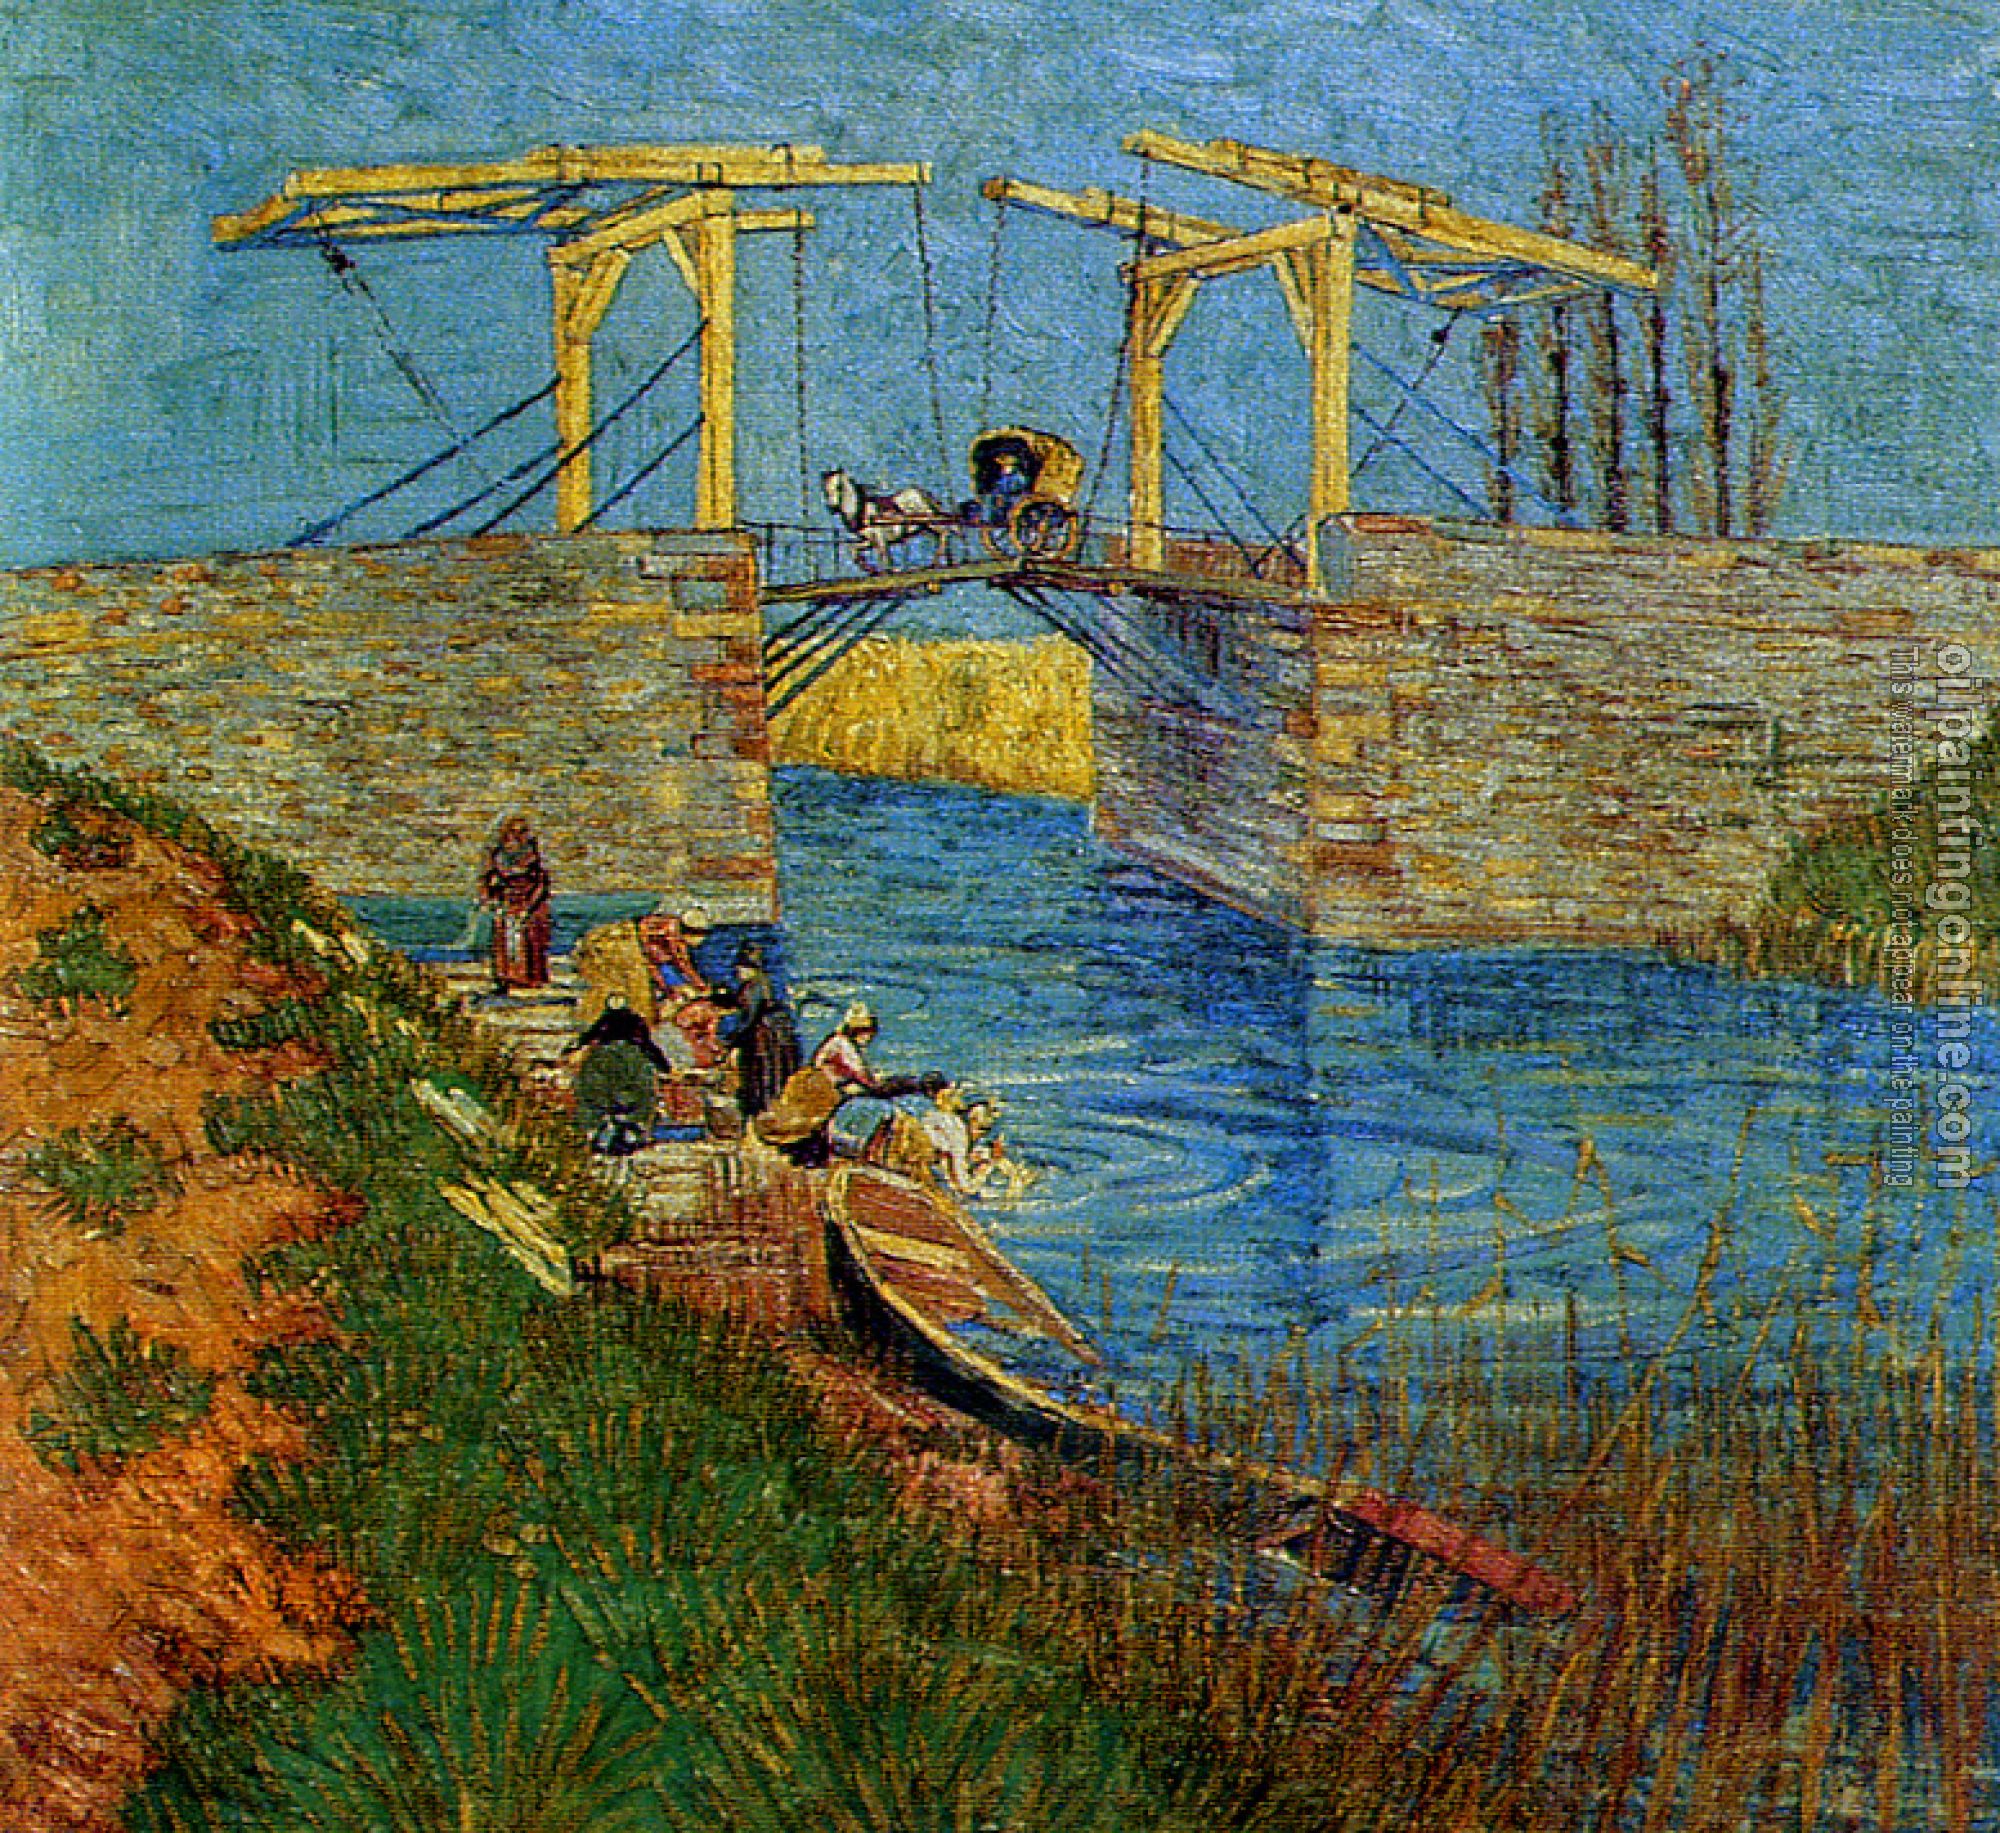 Gogh, Vincent van - Drawbridge with Carriage